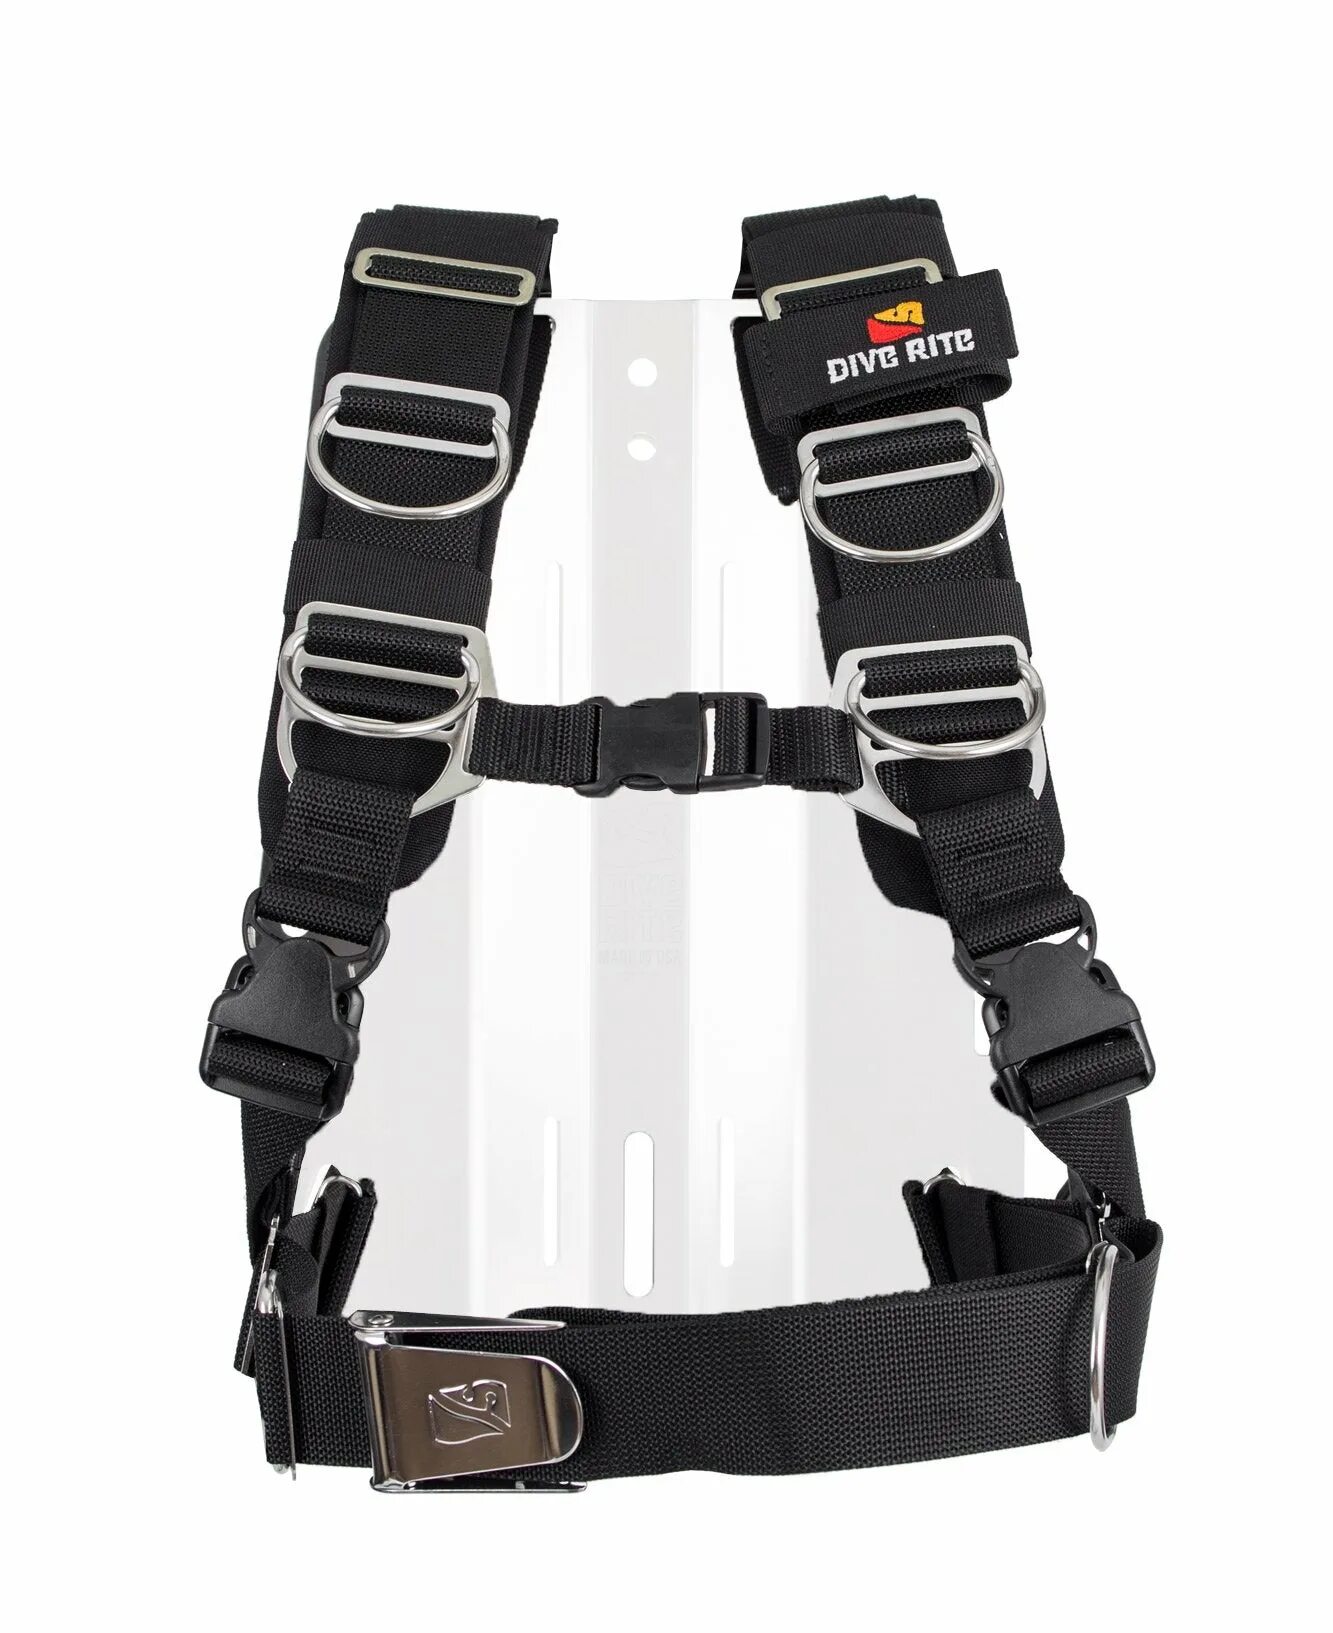 Dive Rite Transplate harness наплечники. Подвесная система для дайвинга Dive Rite. Спинка стальная Dive Rite. Подвесная система Dive Rite со стальной спинкой. Тек компакт